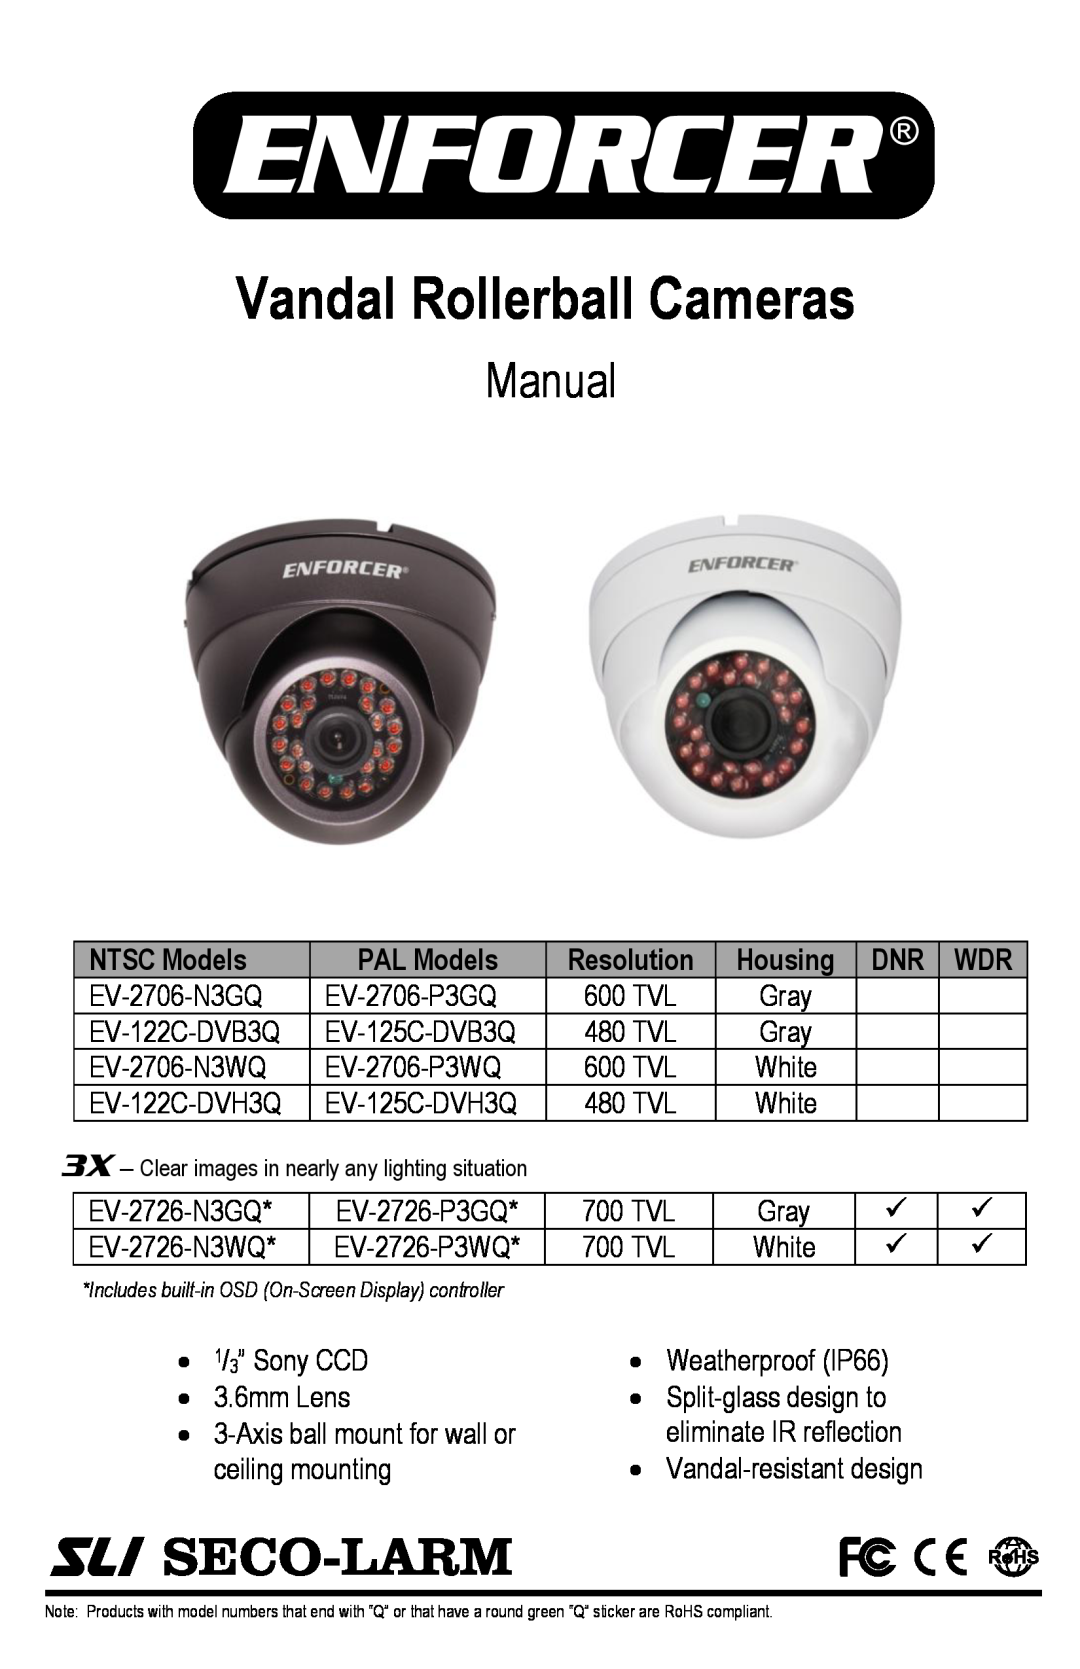 SECO-LARM USA EV-2726-N3GQ, EV-2726-N3WQ, EV-2706-P3WQ, EV-2706-N3WQ manual Vandal Rollerball Cameras, Manual, NTSC Models 